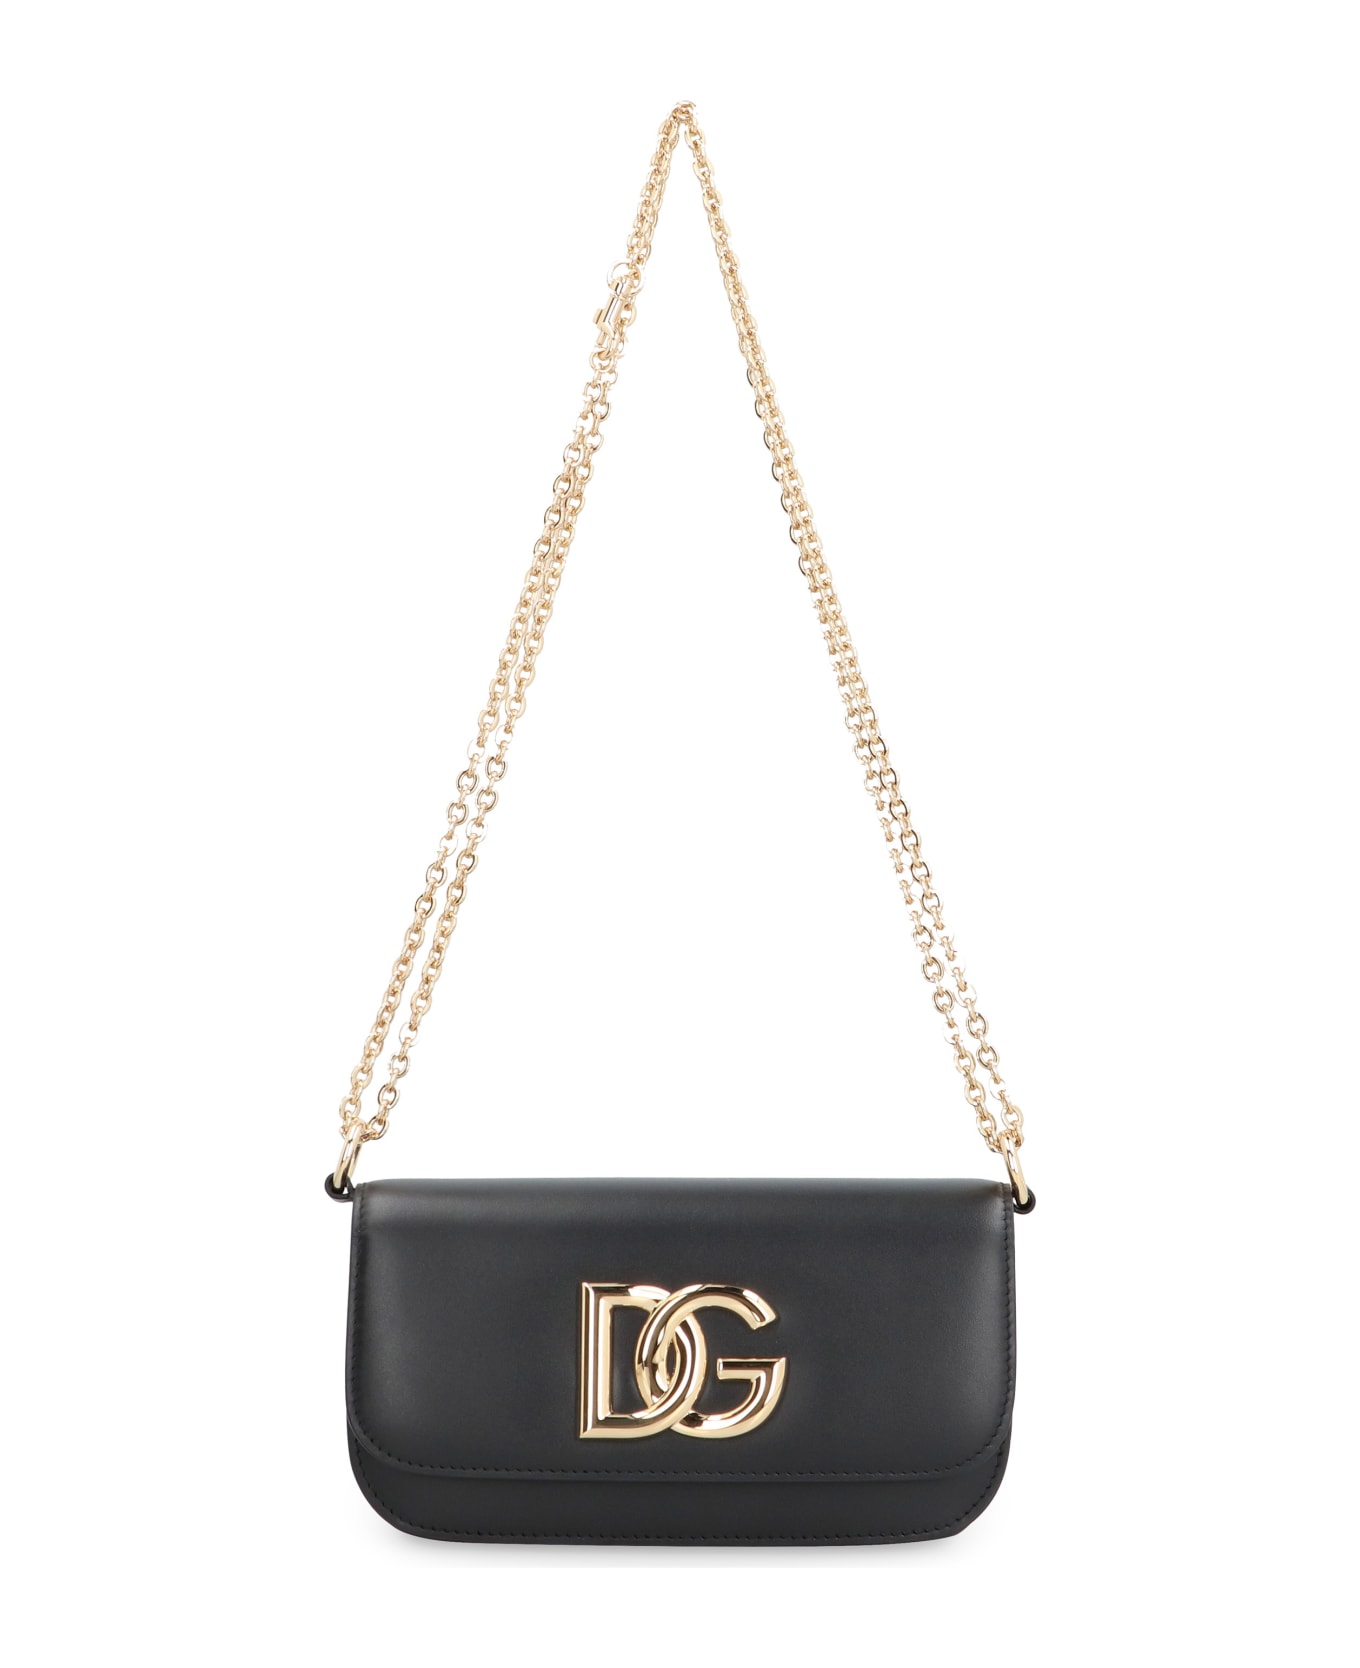 Dolce & Gabbana 3.5 Leather Handbag - black